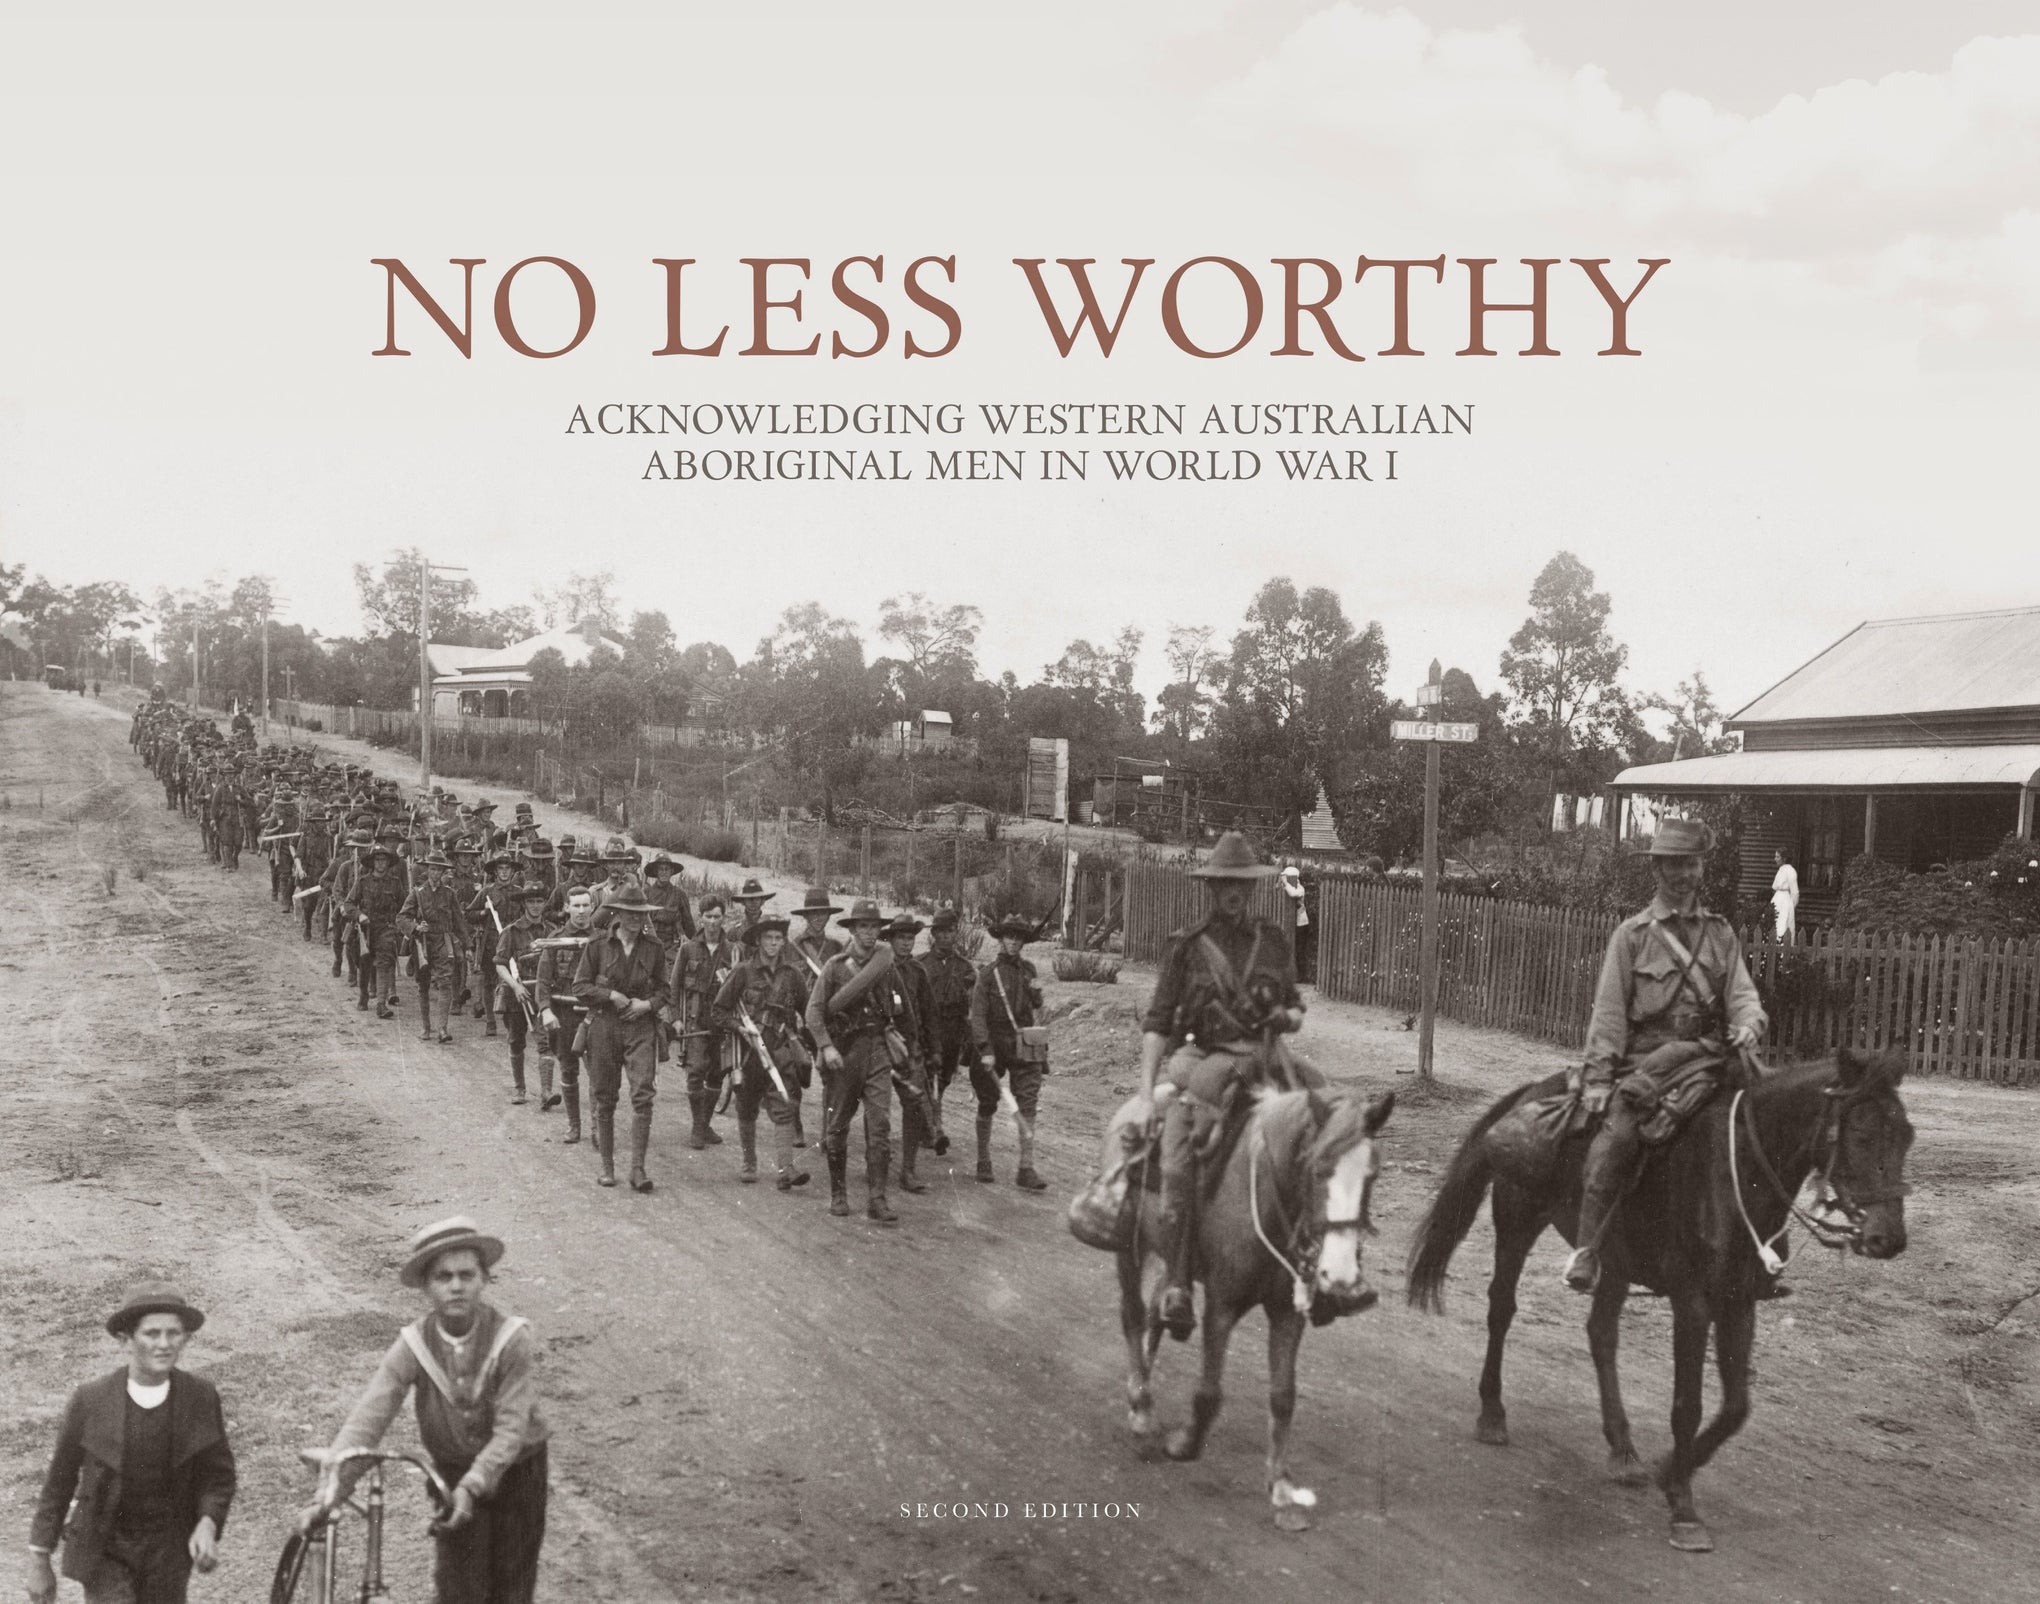 No less worthy: Acknowledging Western Australian Aboriginal men in World War I [second edition]